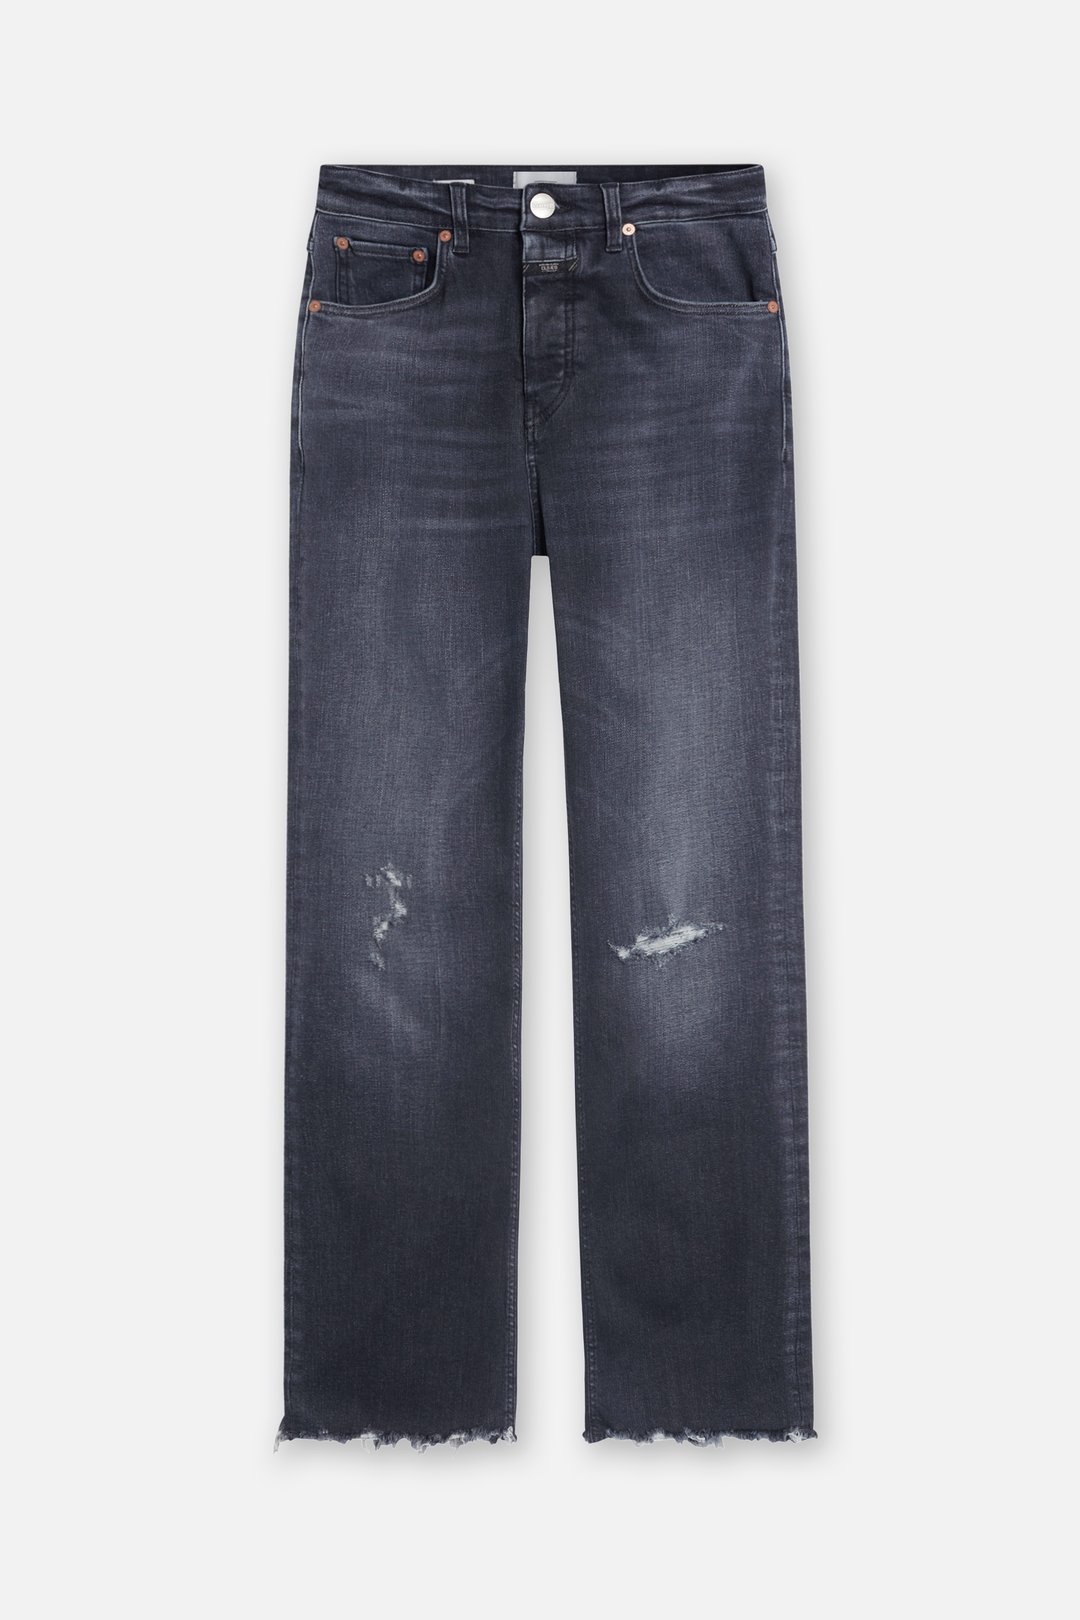 ZARA - Black skinny flare jeans! 6, Recycle Style